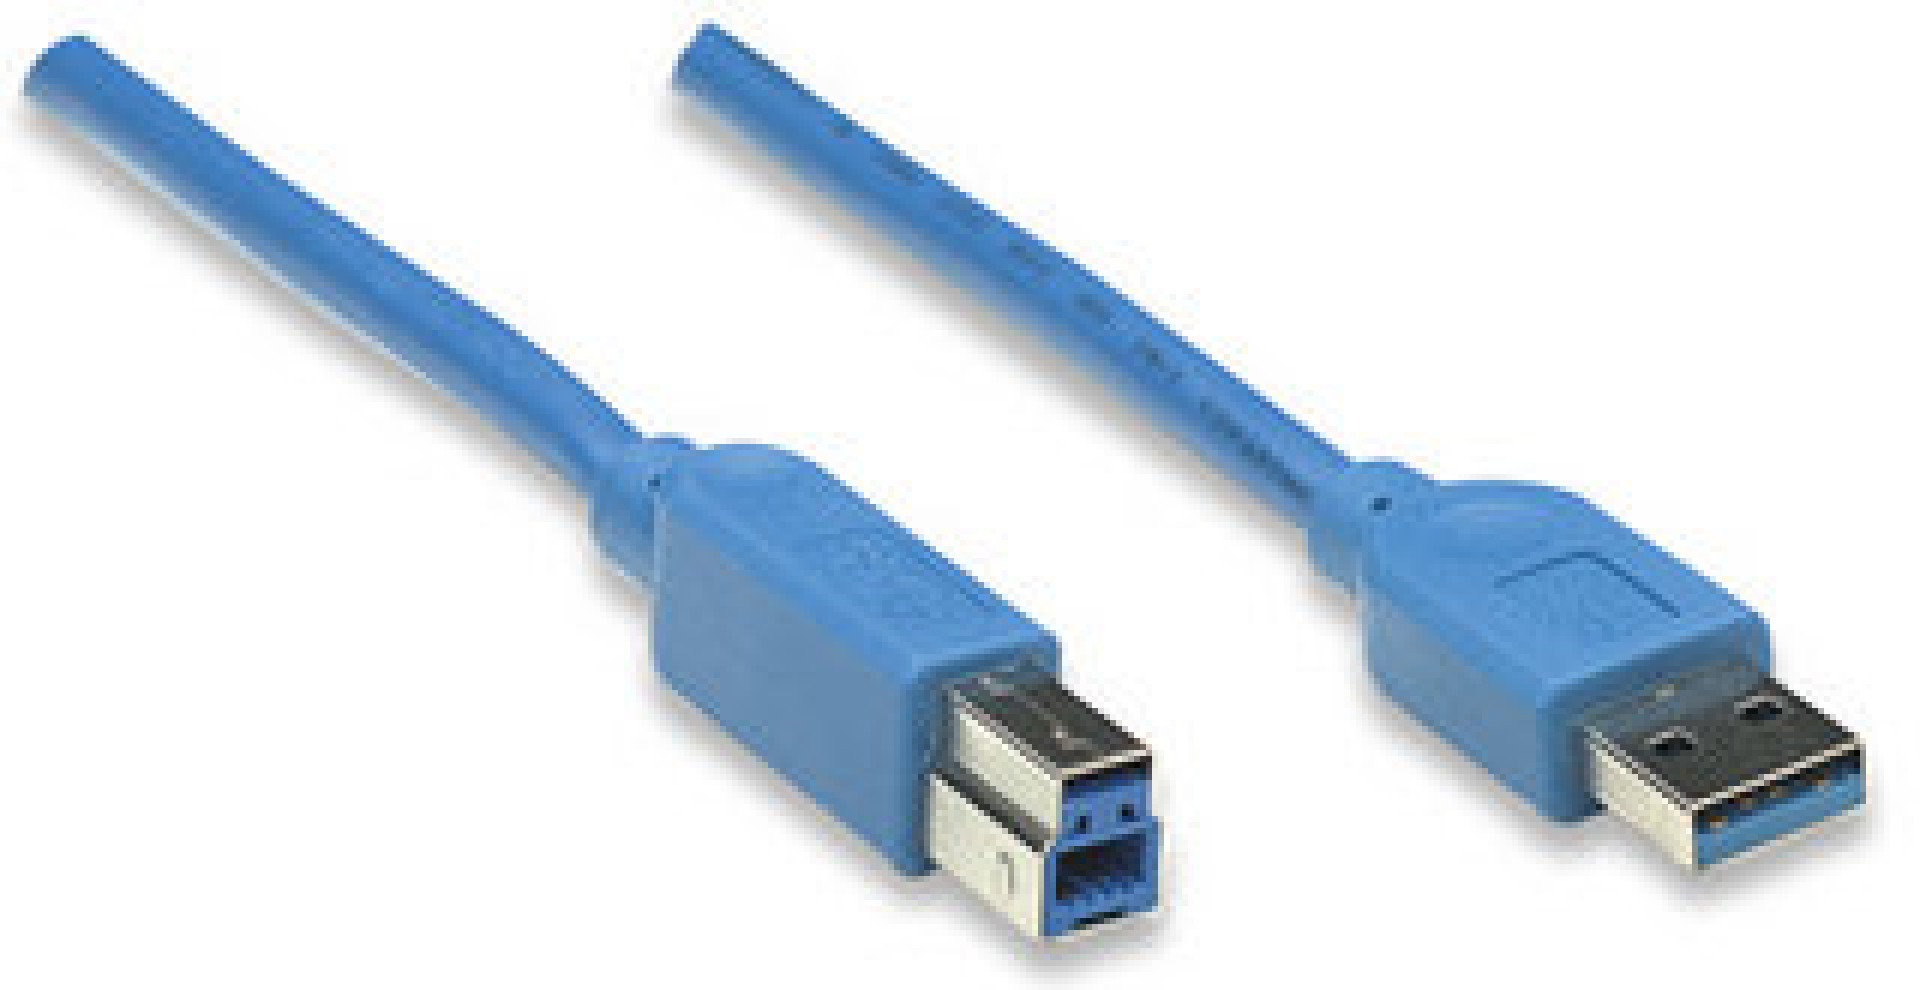 U3-083-BM 50cm Typ-B USB 3.0 Stecker auf Micro 3.0 Typ-B Buchse